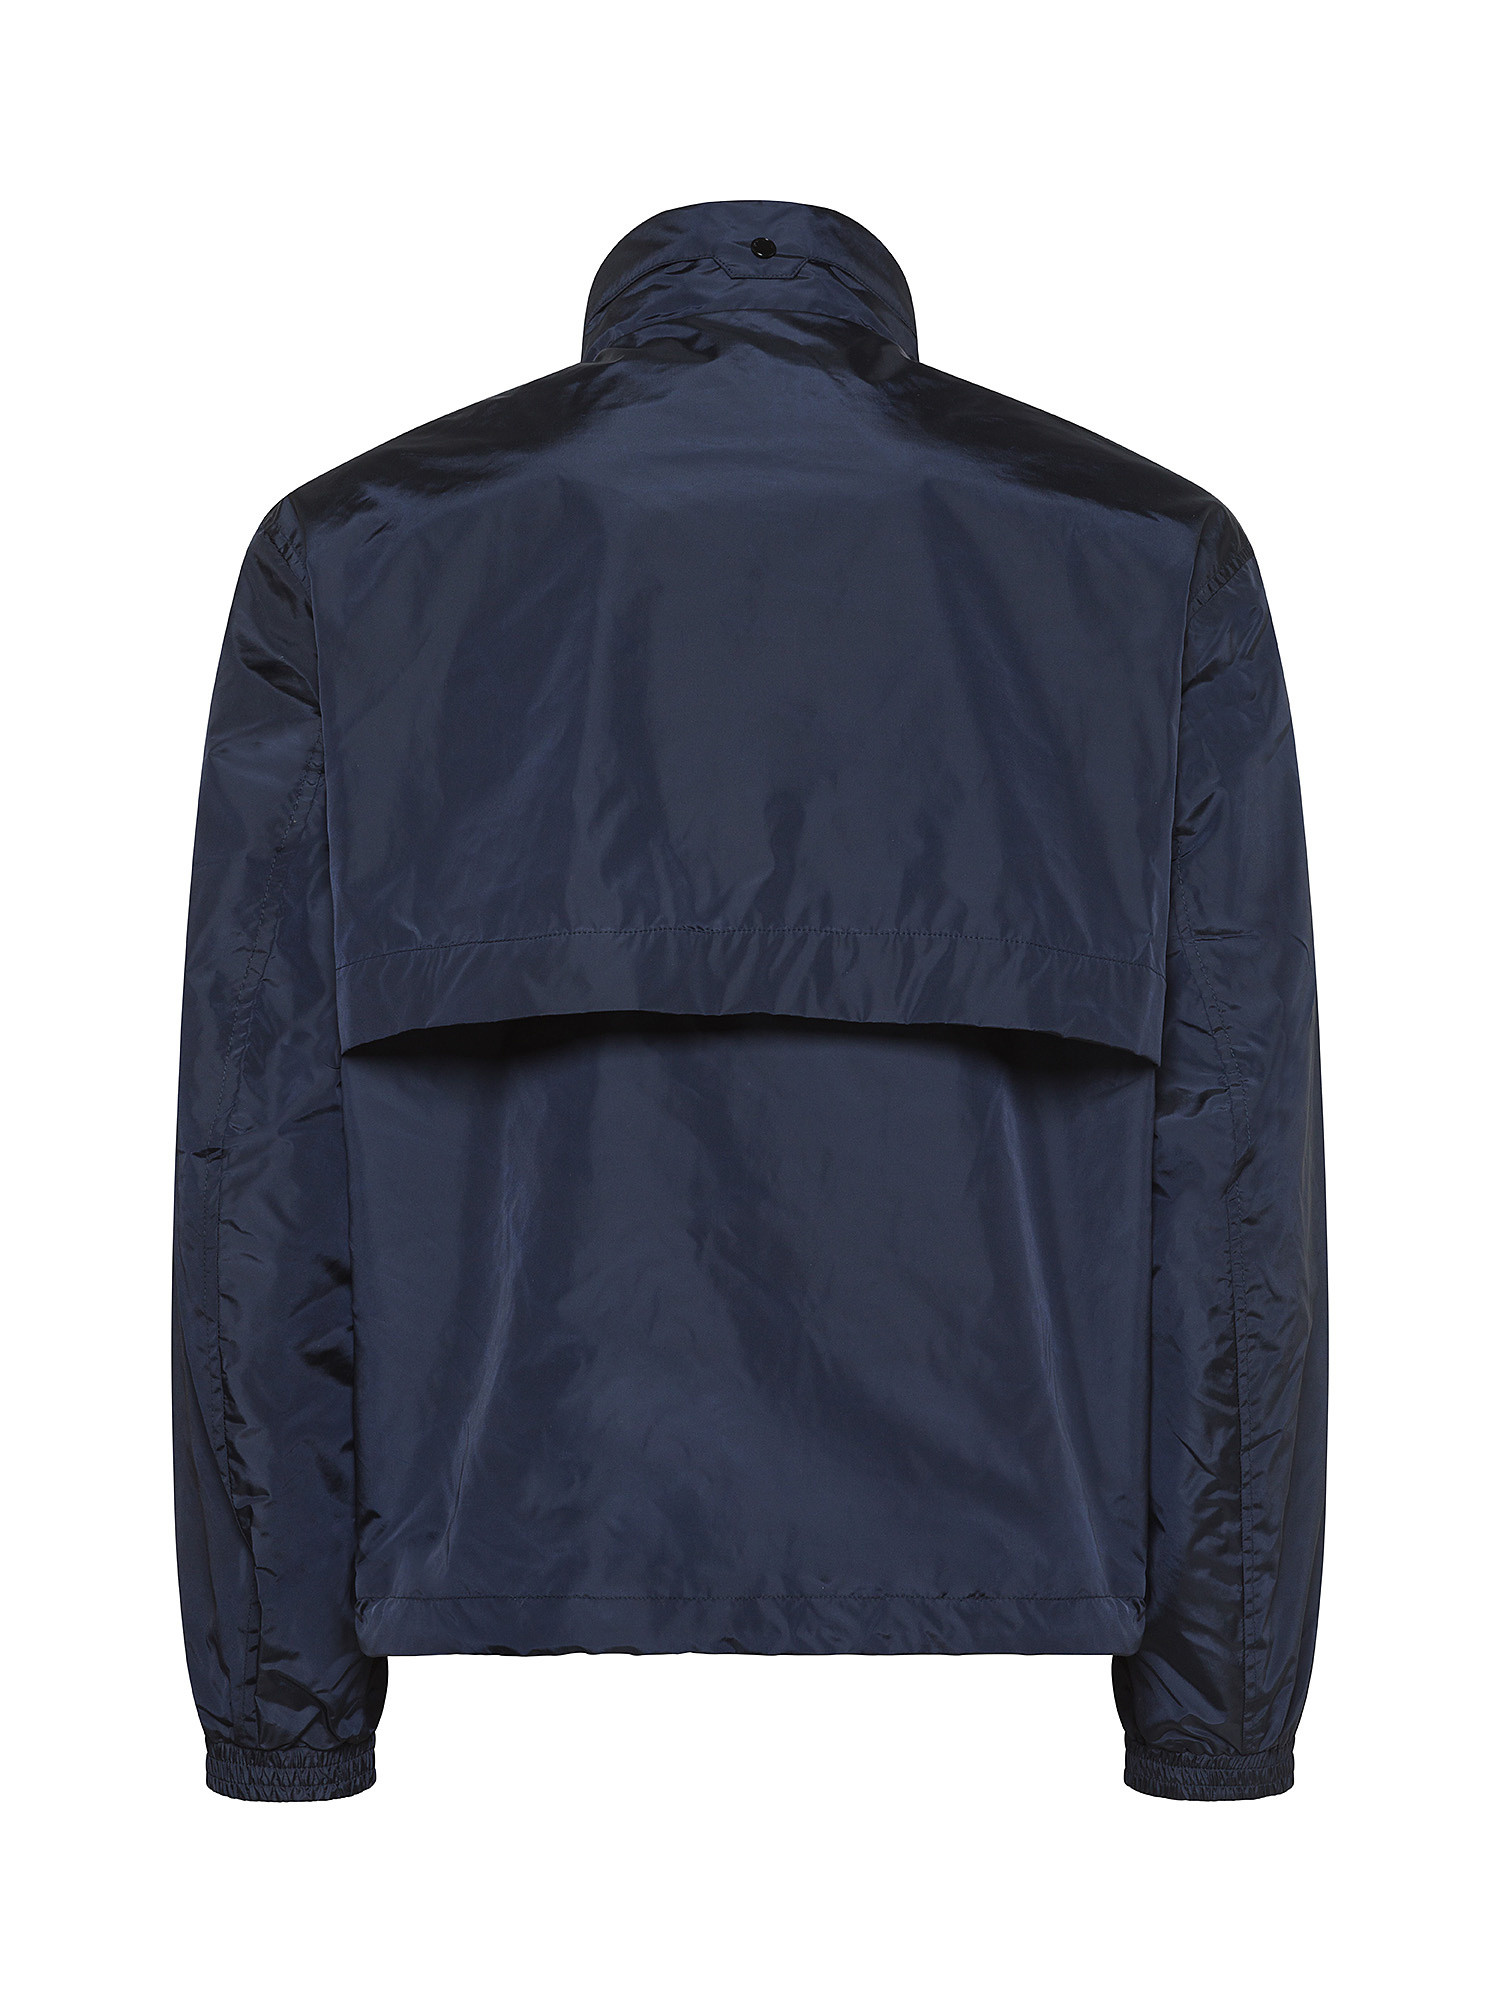 Emporio Armani - Jacket with logo, Dark Blue, large image number 1